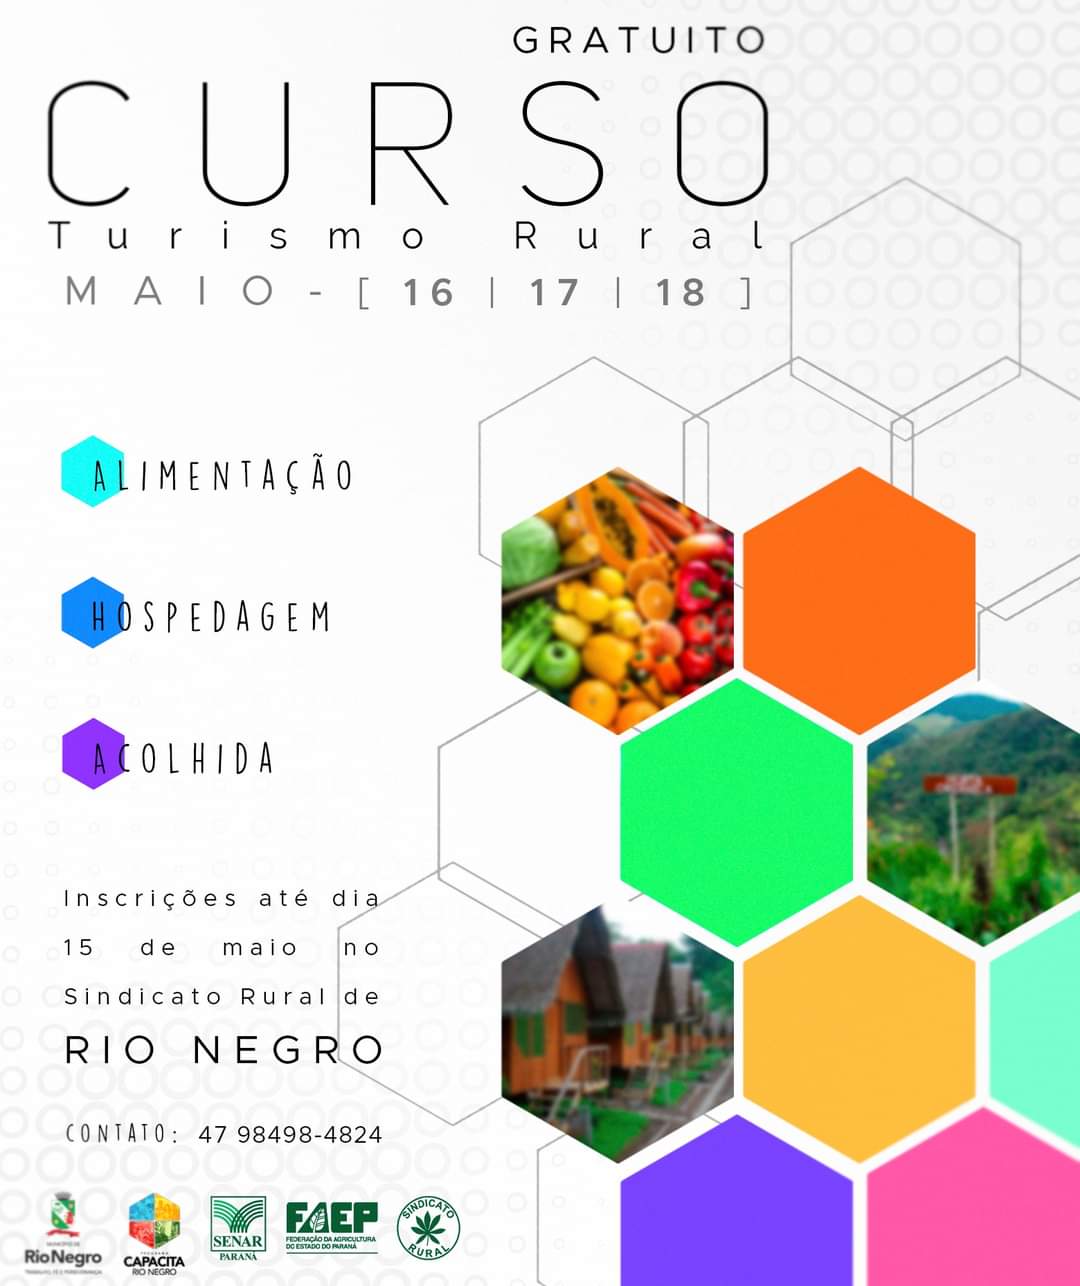 Sindicato Rural de Rio Negro disponibiliza curso de Turismo Rural